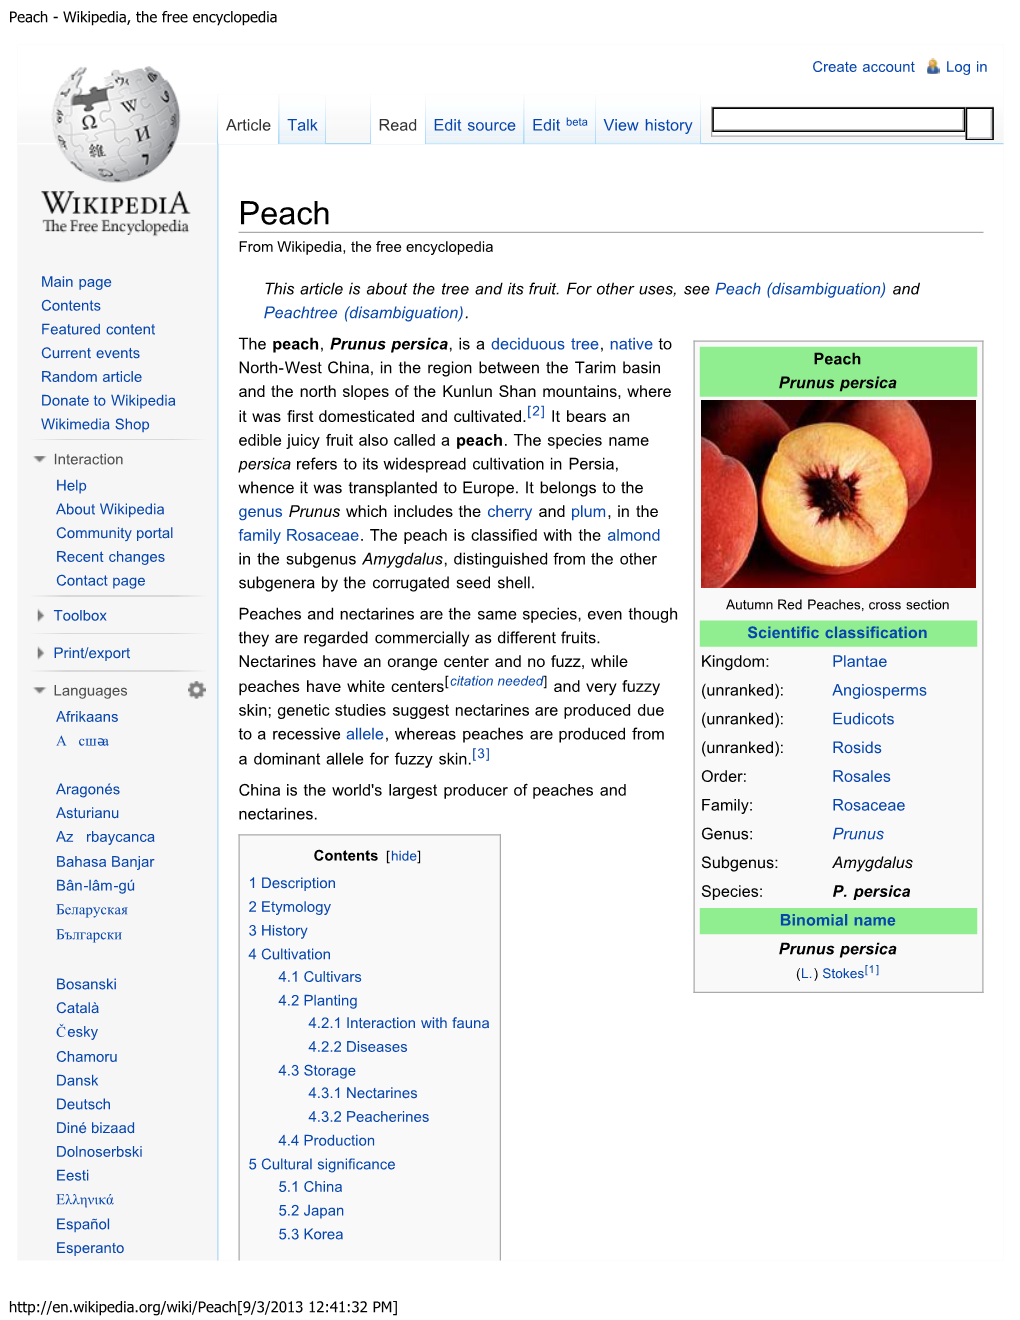 Peach - Wikipedia, the Free Encyclopedia